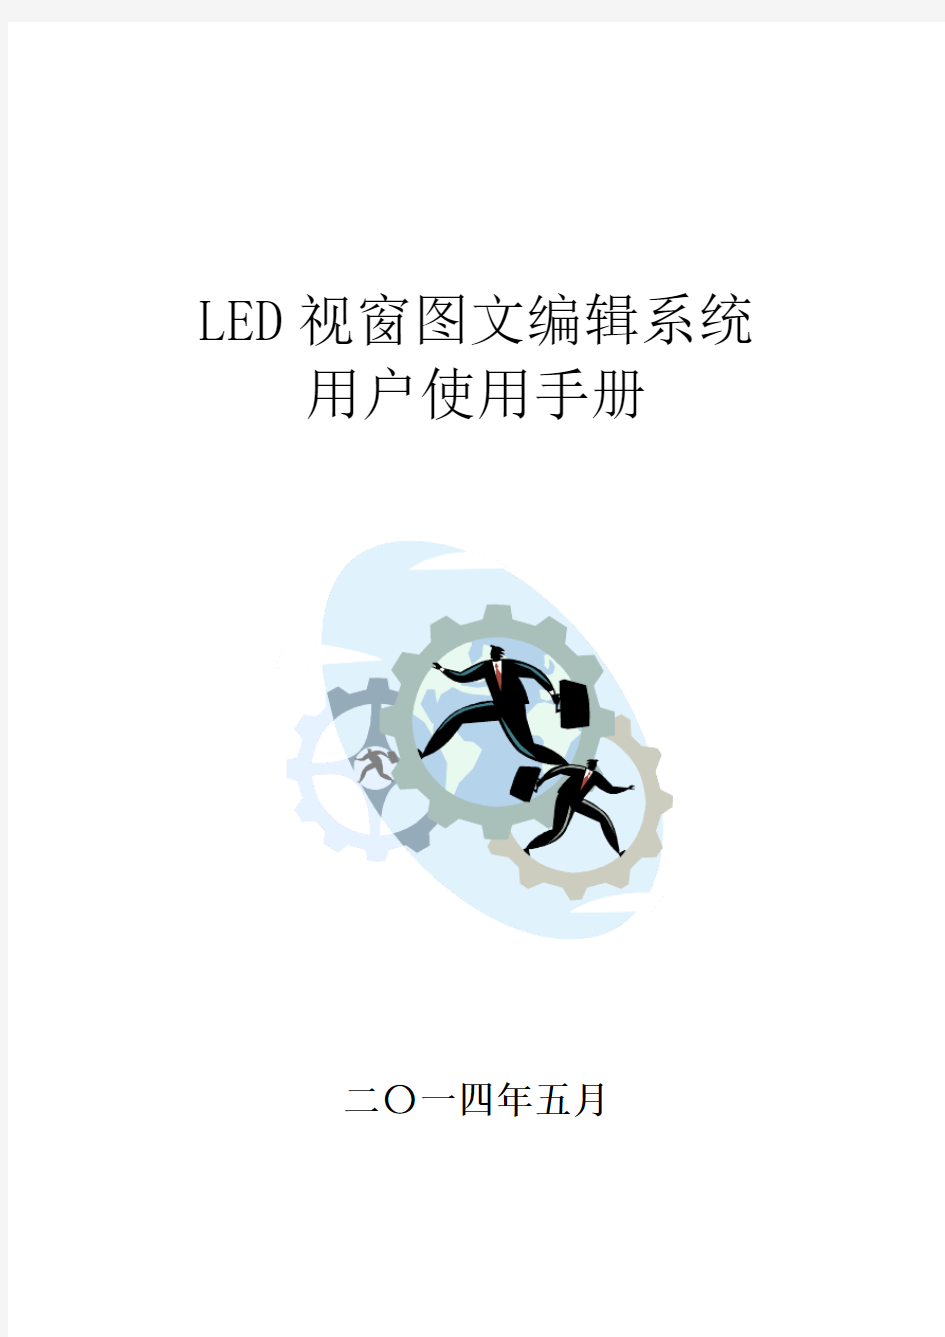 LED视窗2014用户操作手册分解